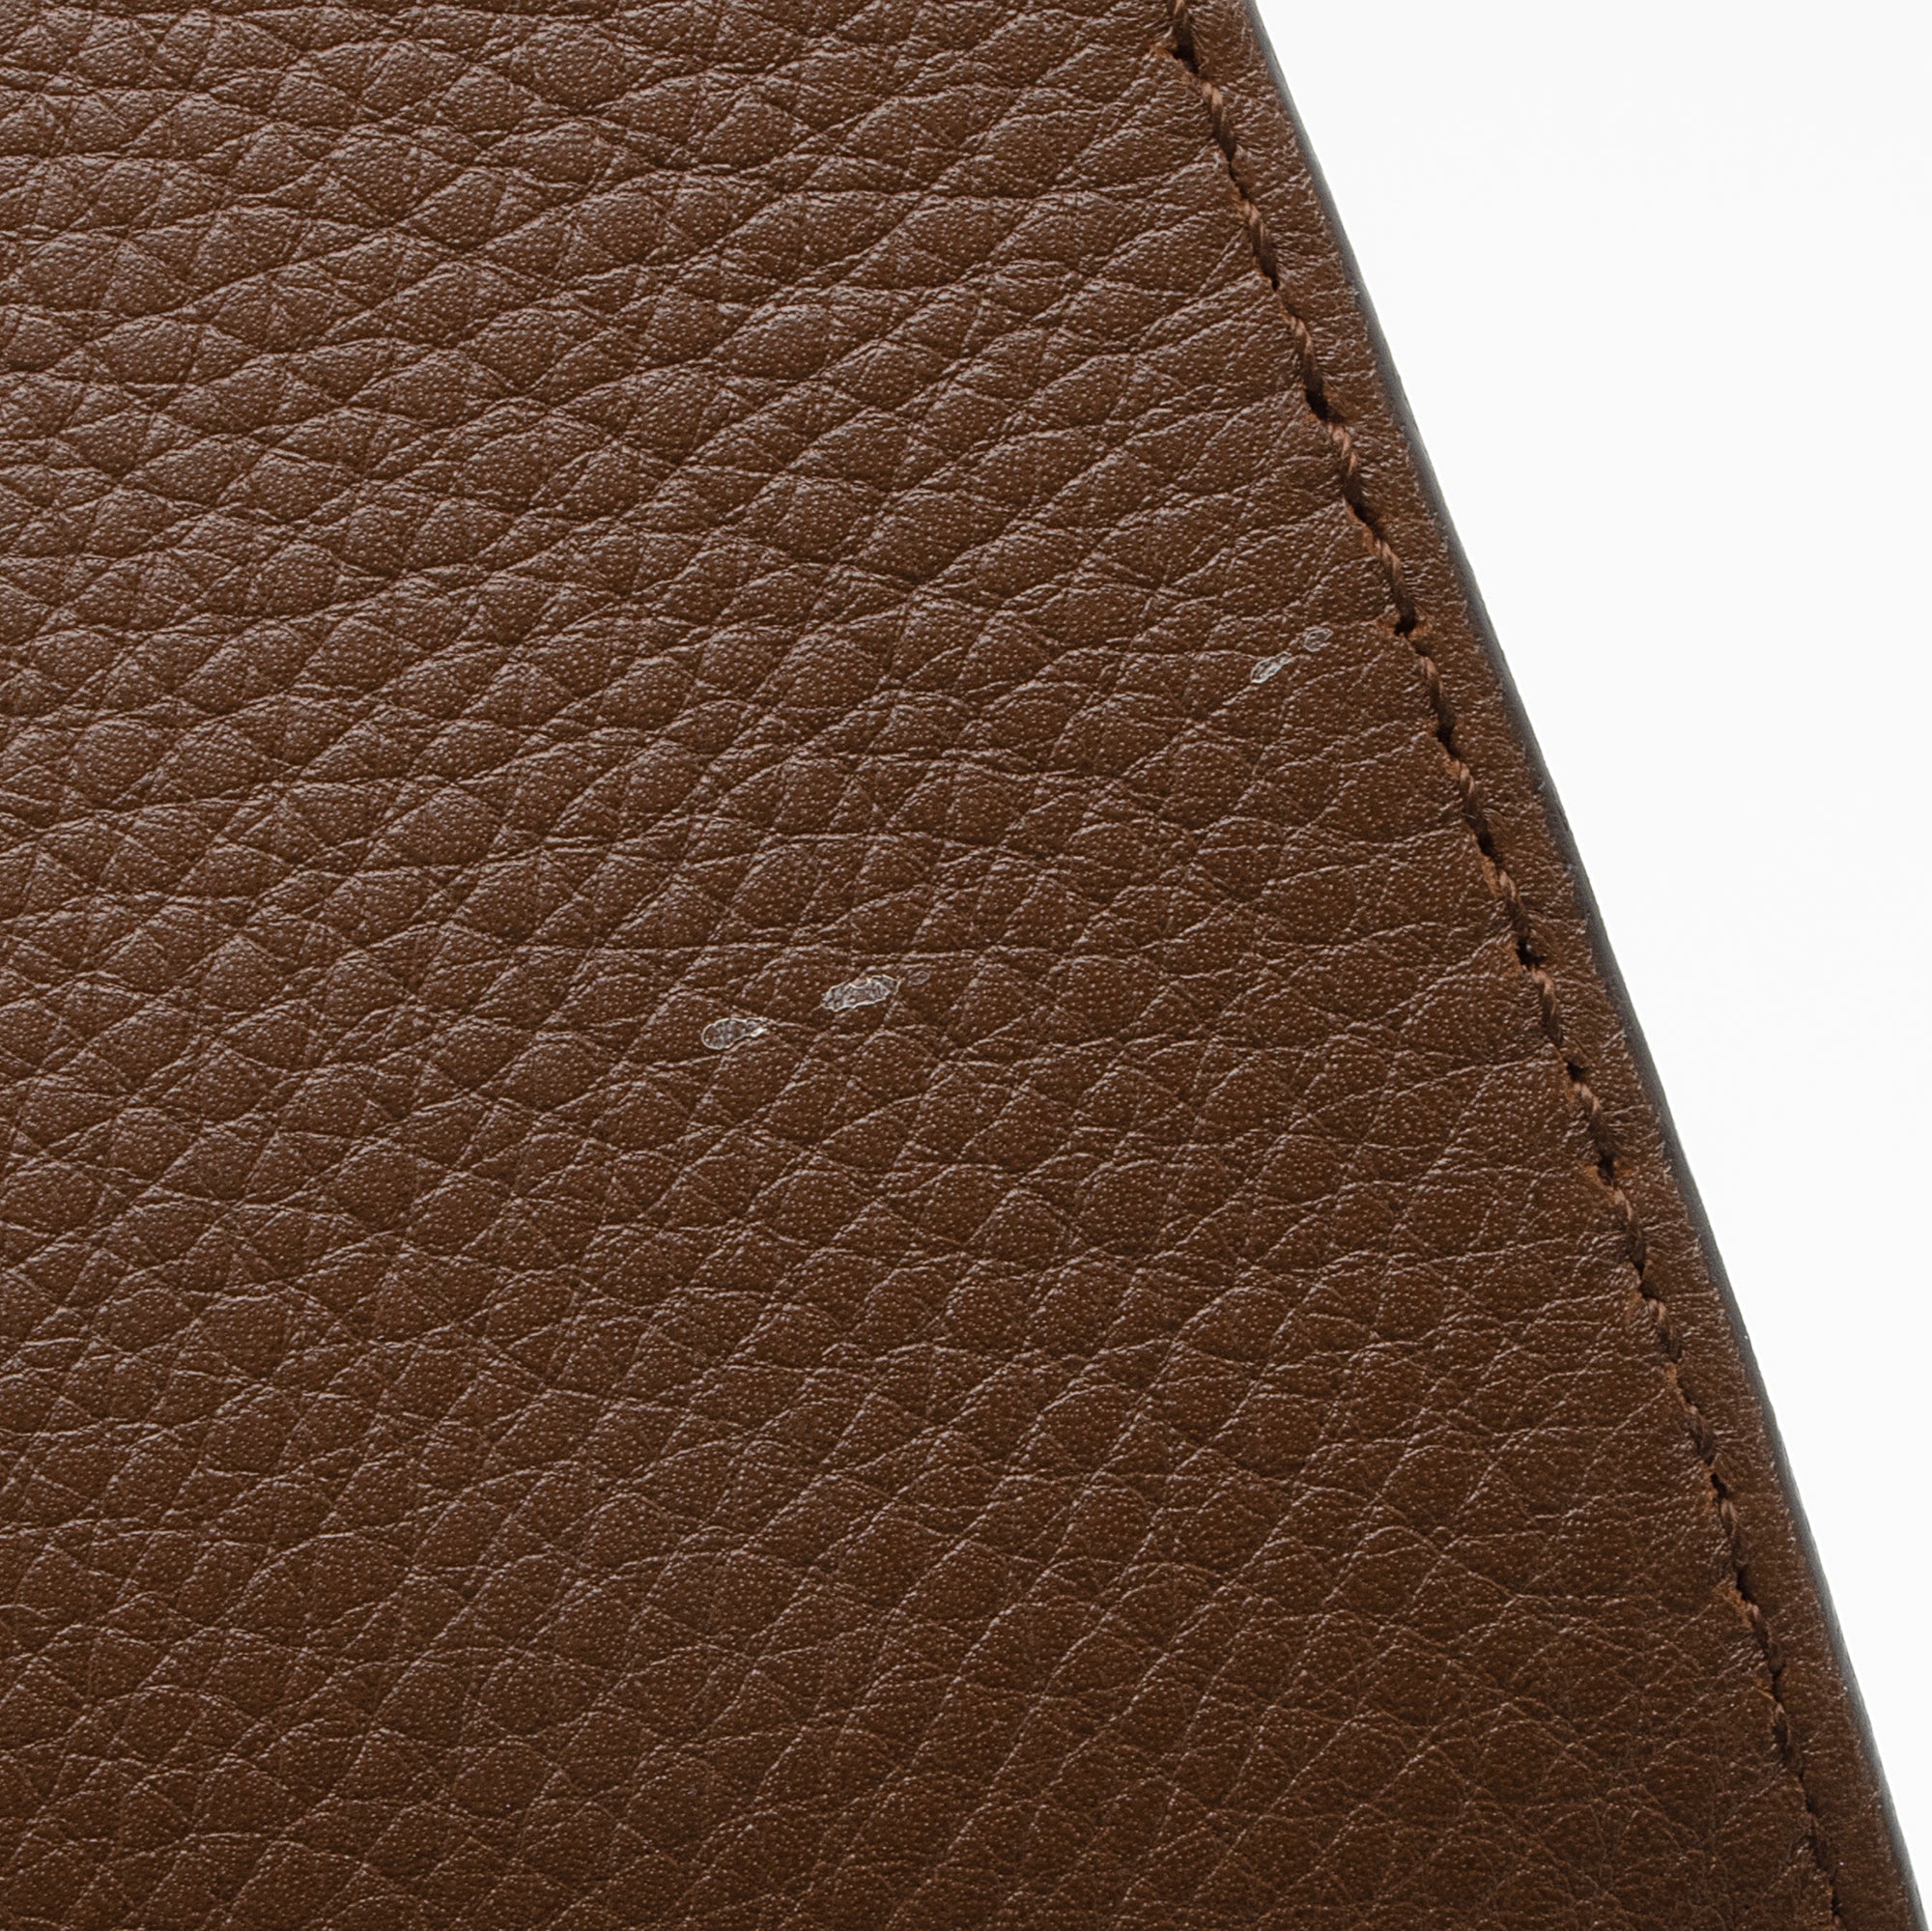 Gucci Leather GG Marmont Large Shoulder Bag